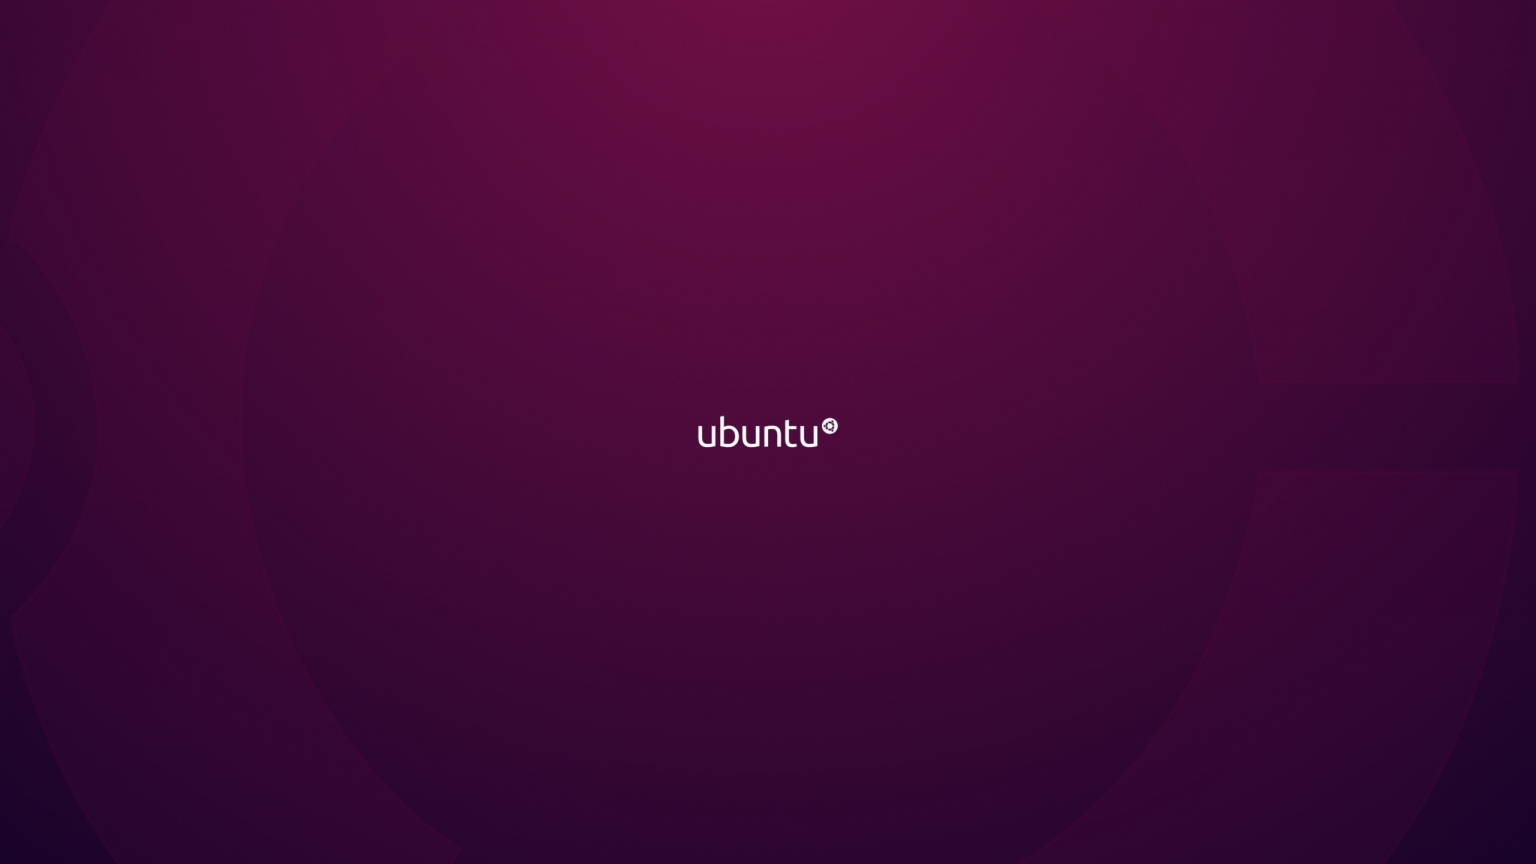 Ubuntu Purple for 1536 x 864 HDTV resolution